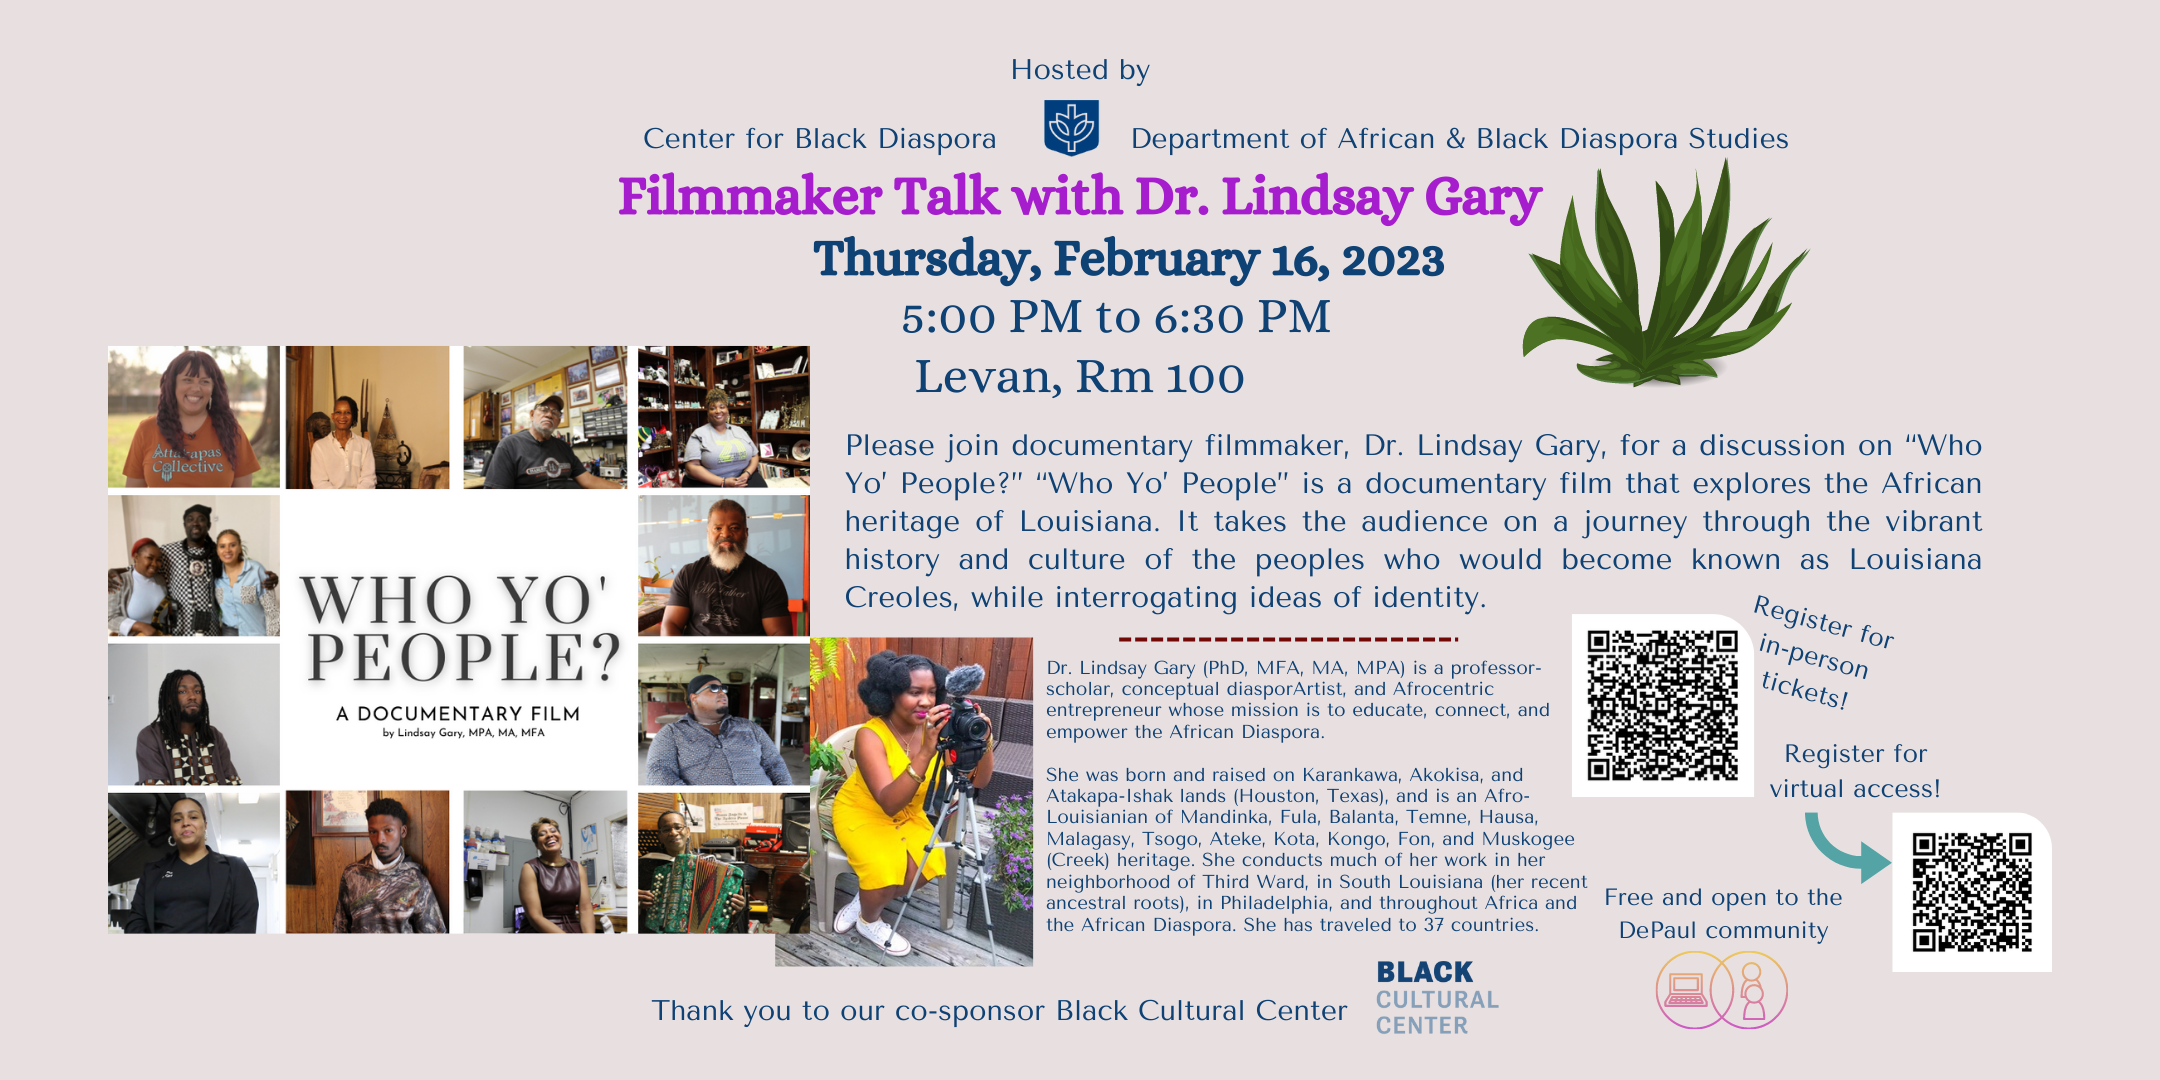 Filmmaker Talk with Dr. Lindsay Gary on February 16, 2023